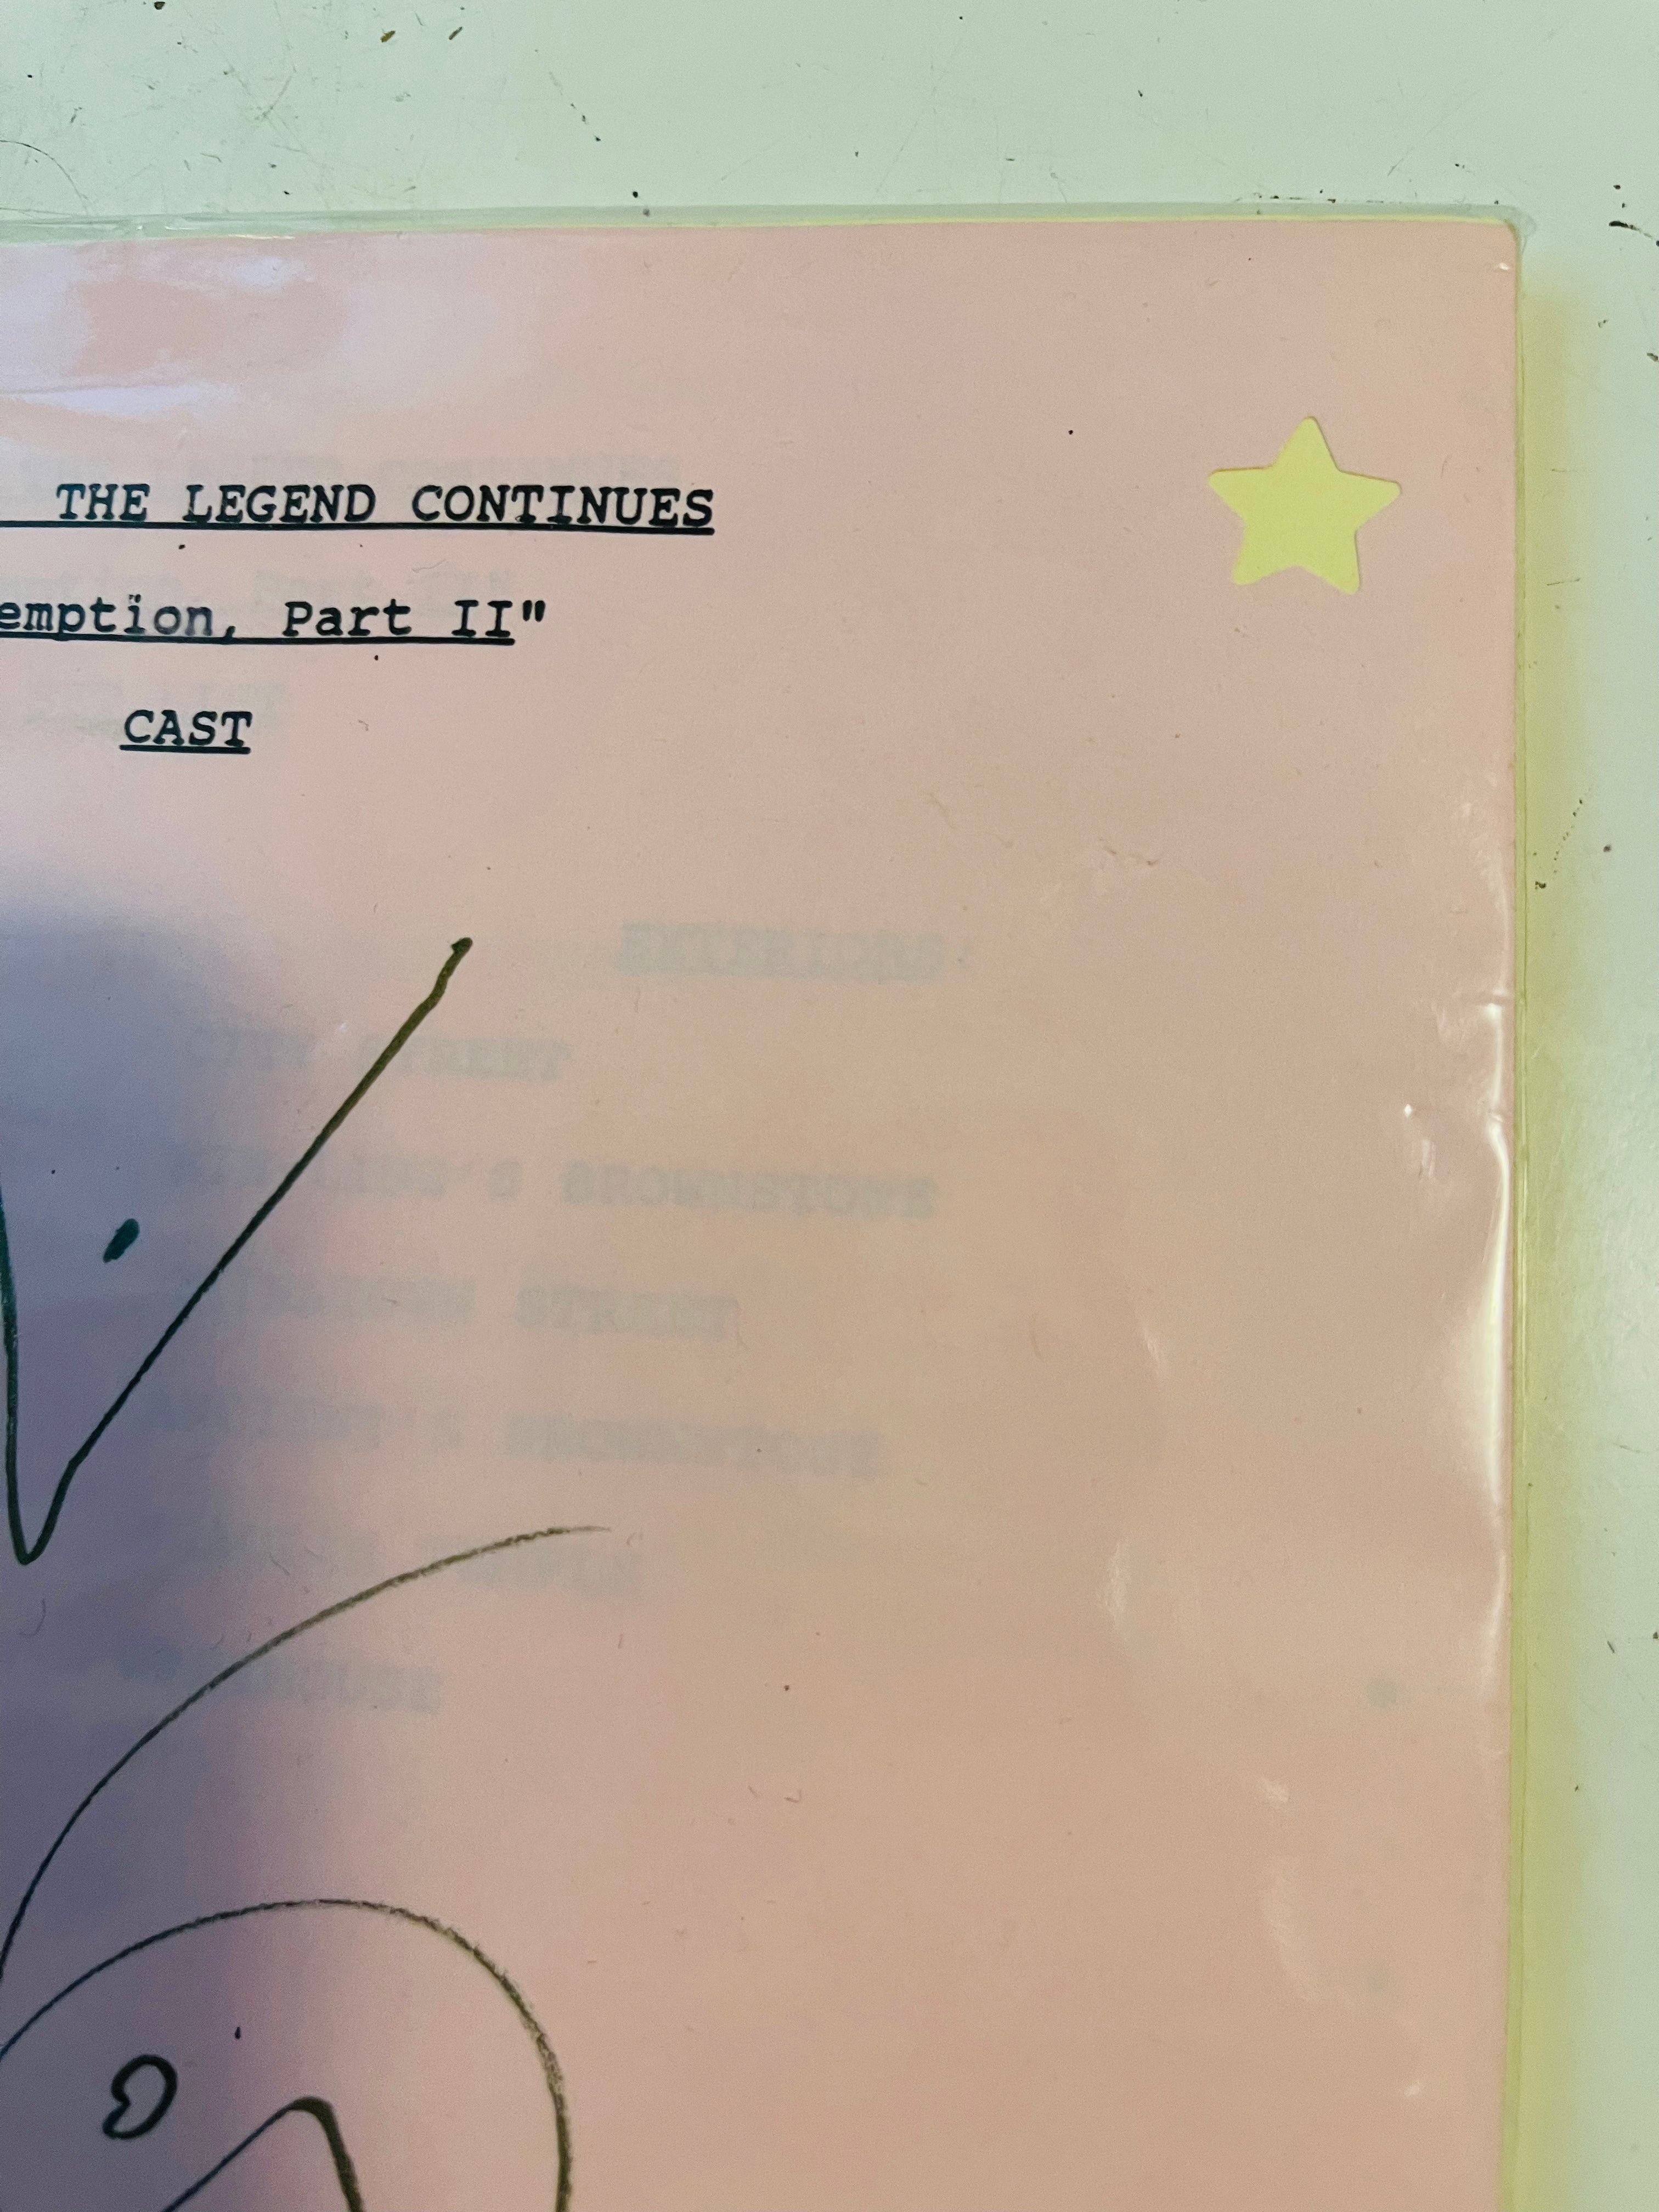 Kung Fu David Carradine original autograph shooting script with COA